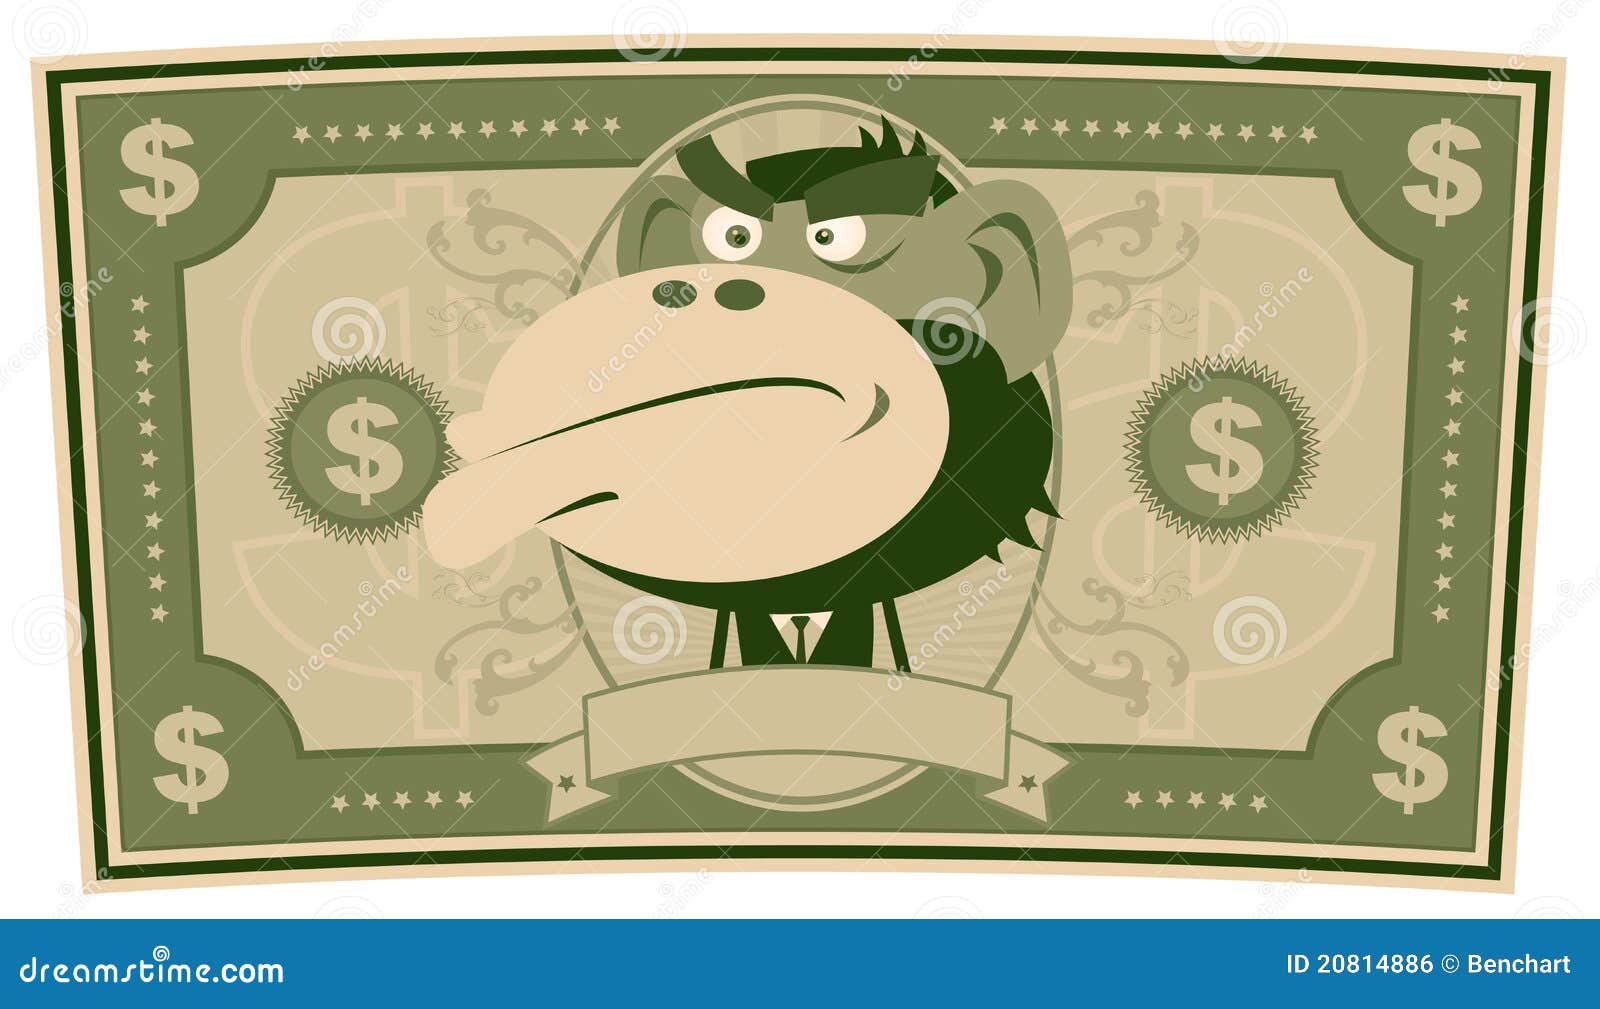 Funny Money - Cartoon US Dollar Royalty Free Stock Image - Image: 20814886